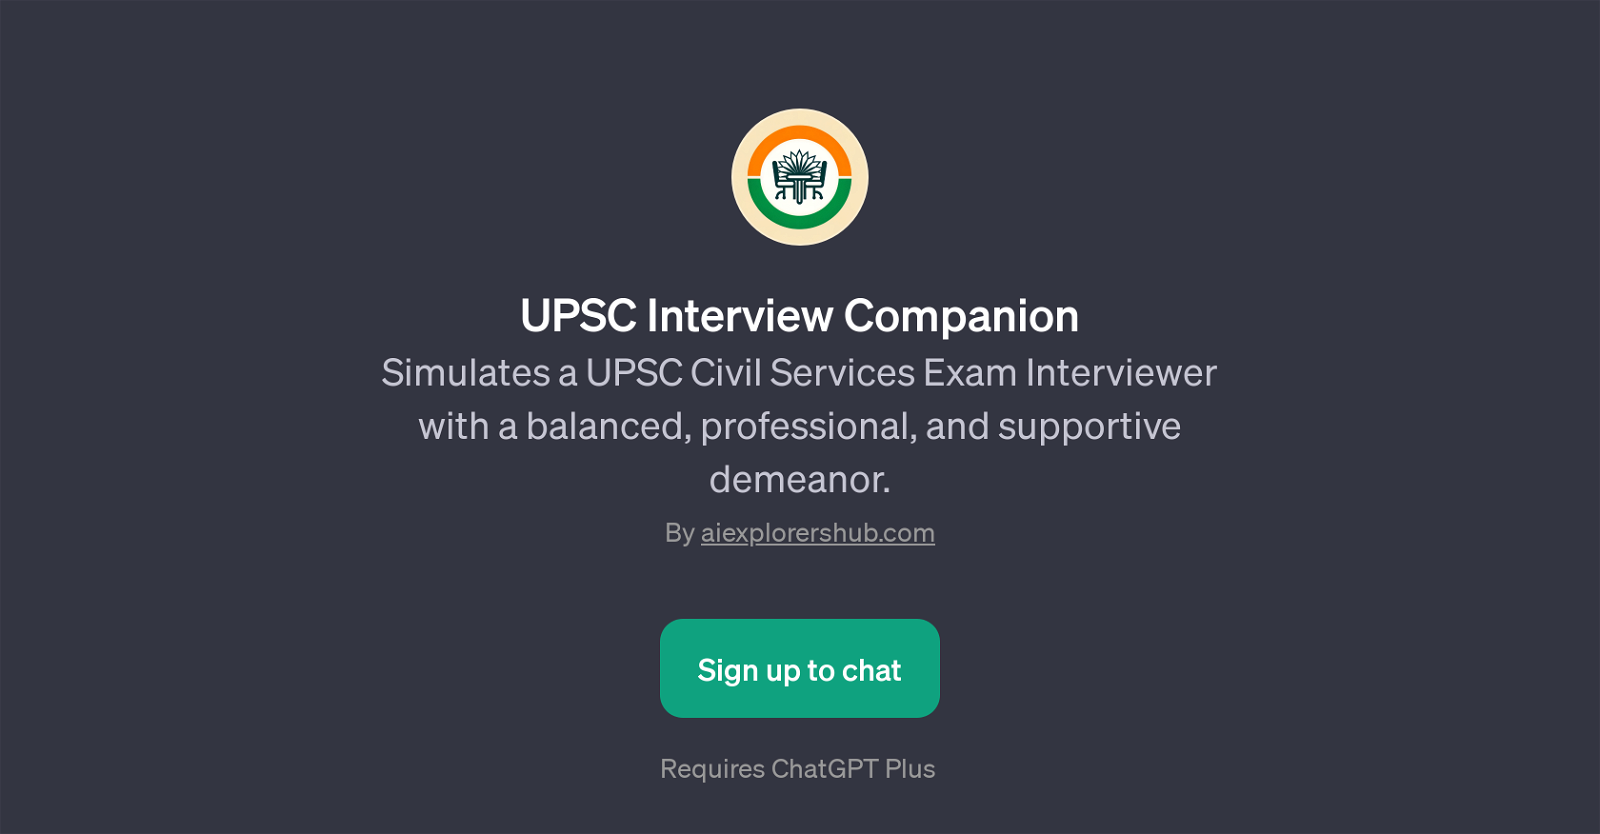 UPSC Interview Companion website